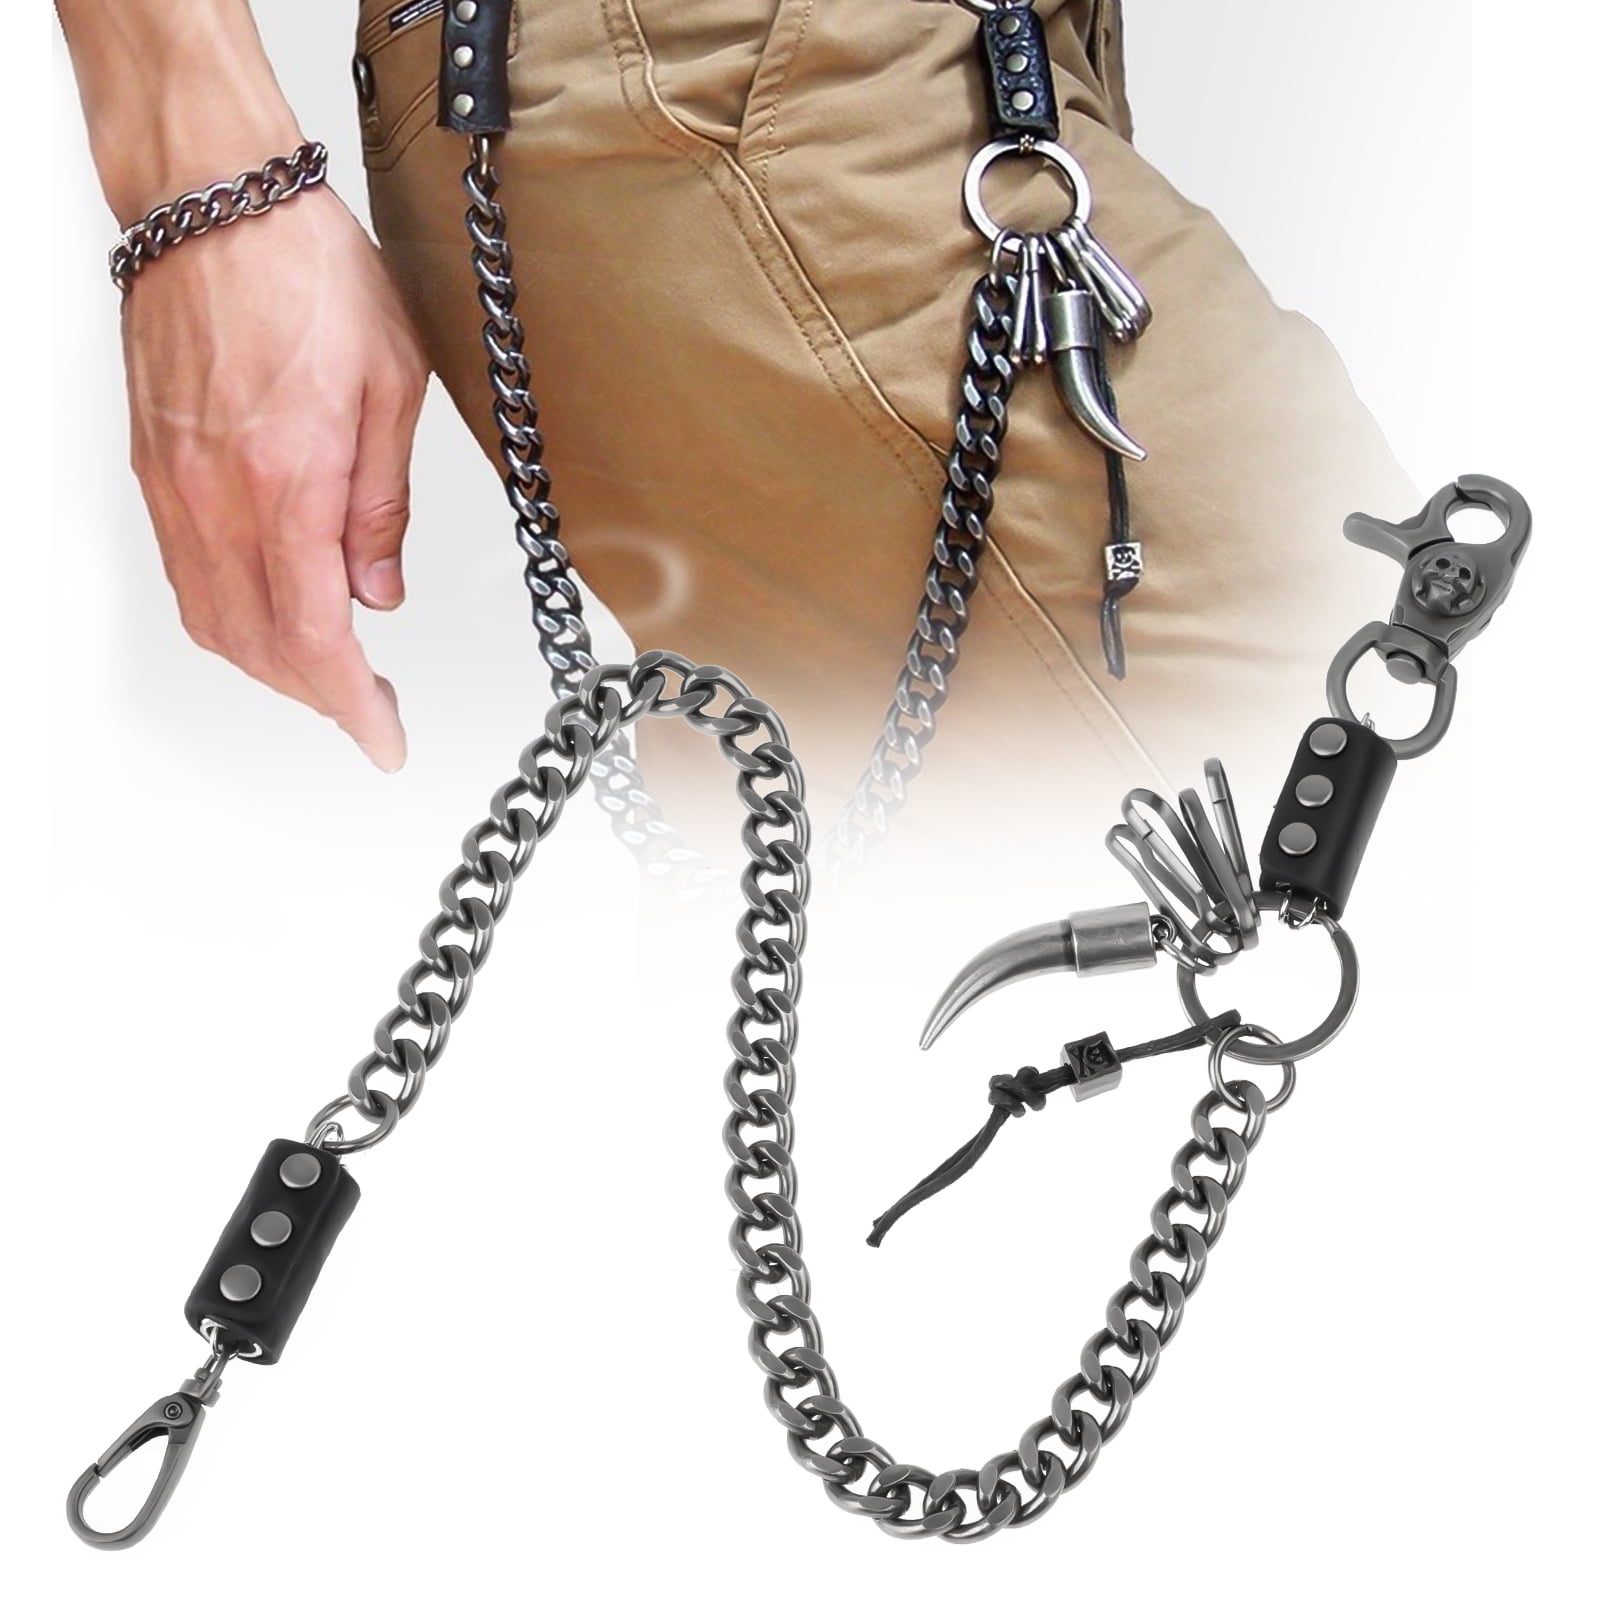 Keys Wallet Wallet Chain Hip Hop Punk Skull Key Jeans Pant Chain DIY Craft Decor Waist Chain Suitable For Purse Handbag Strap